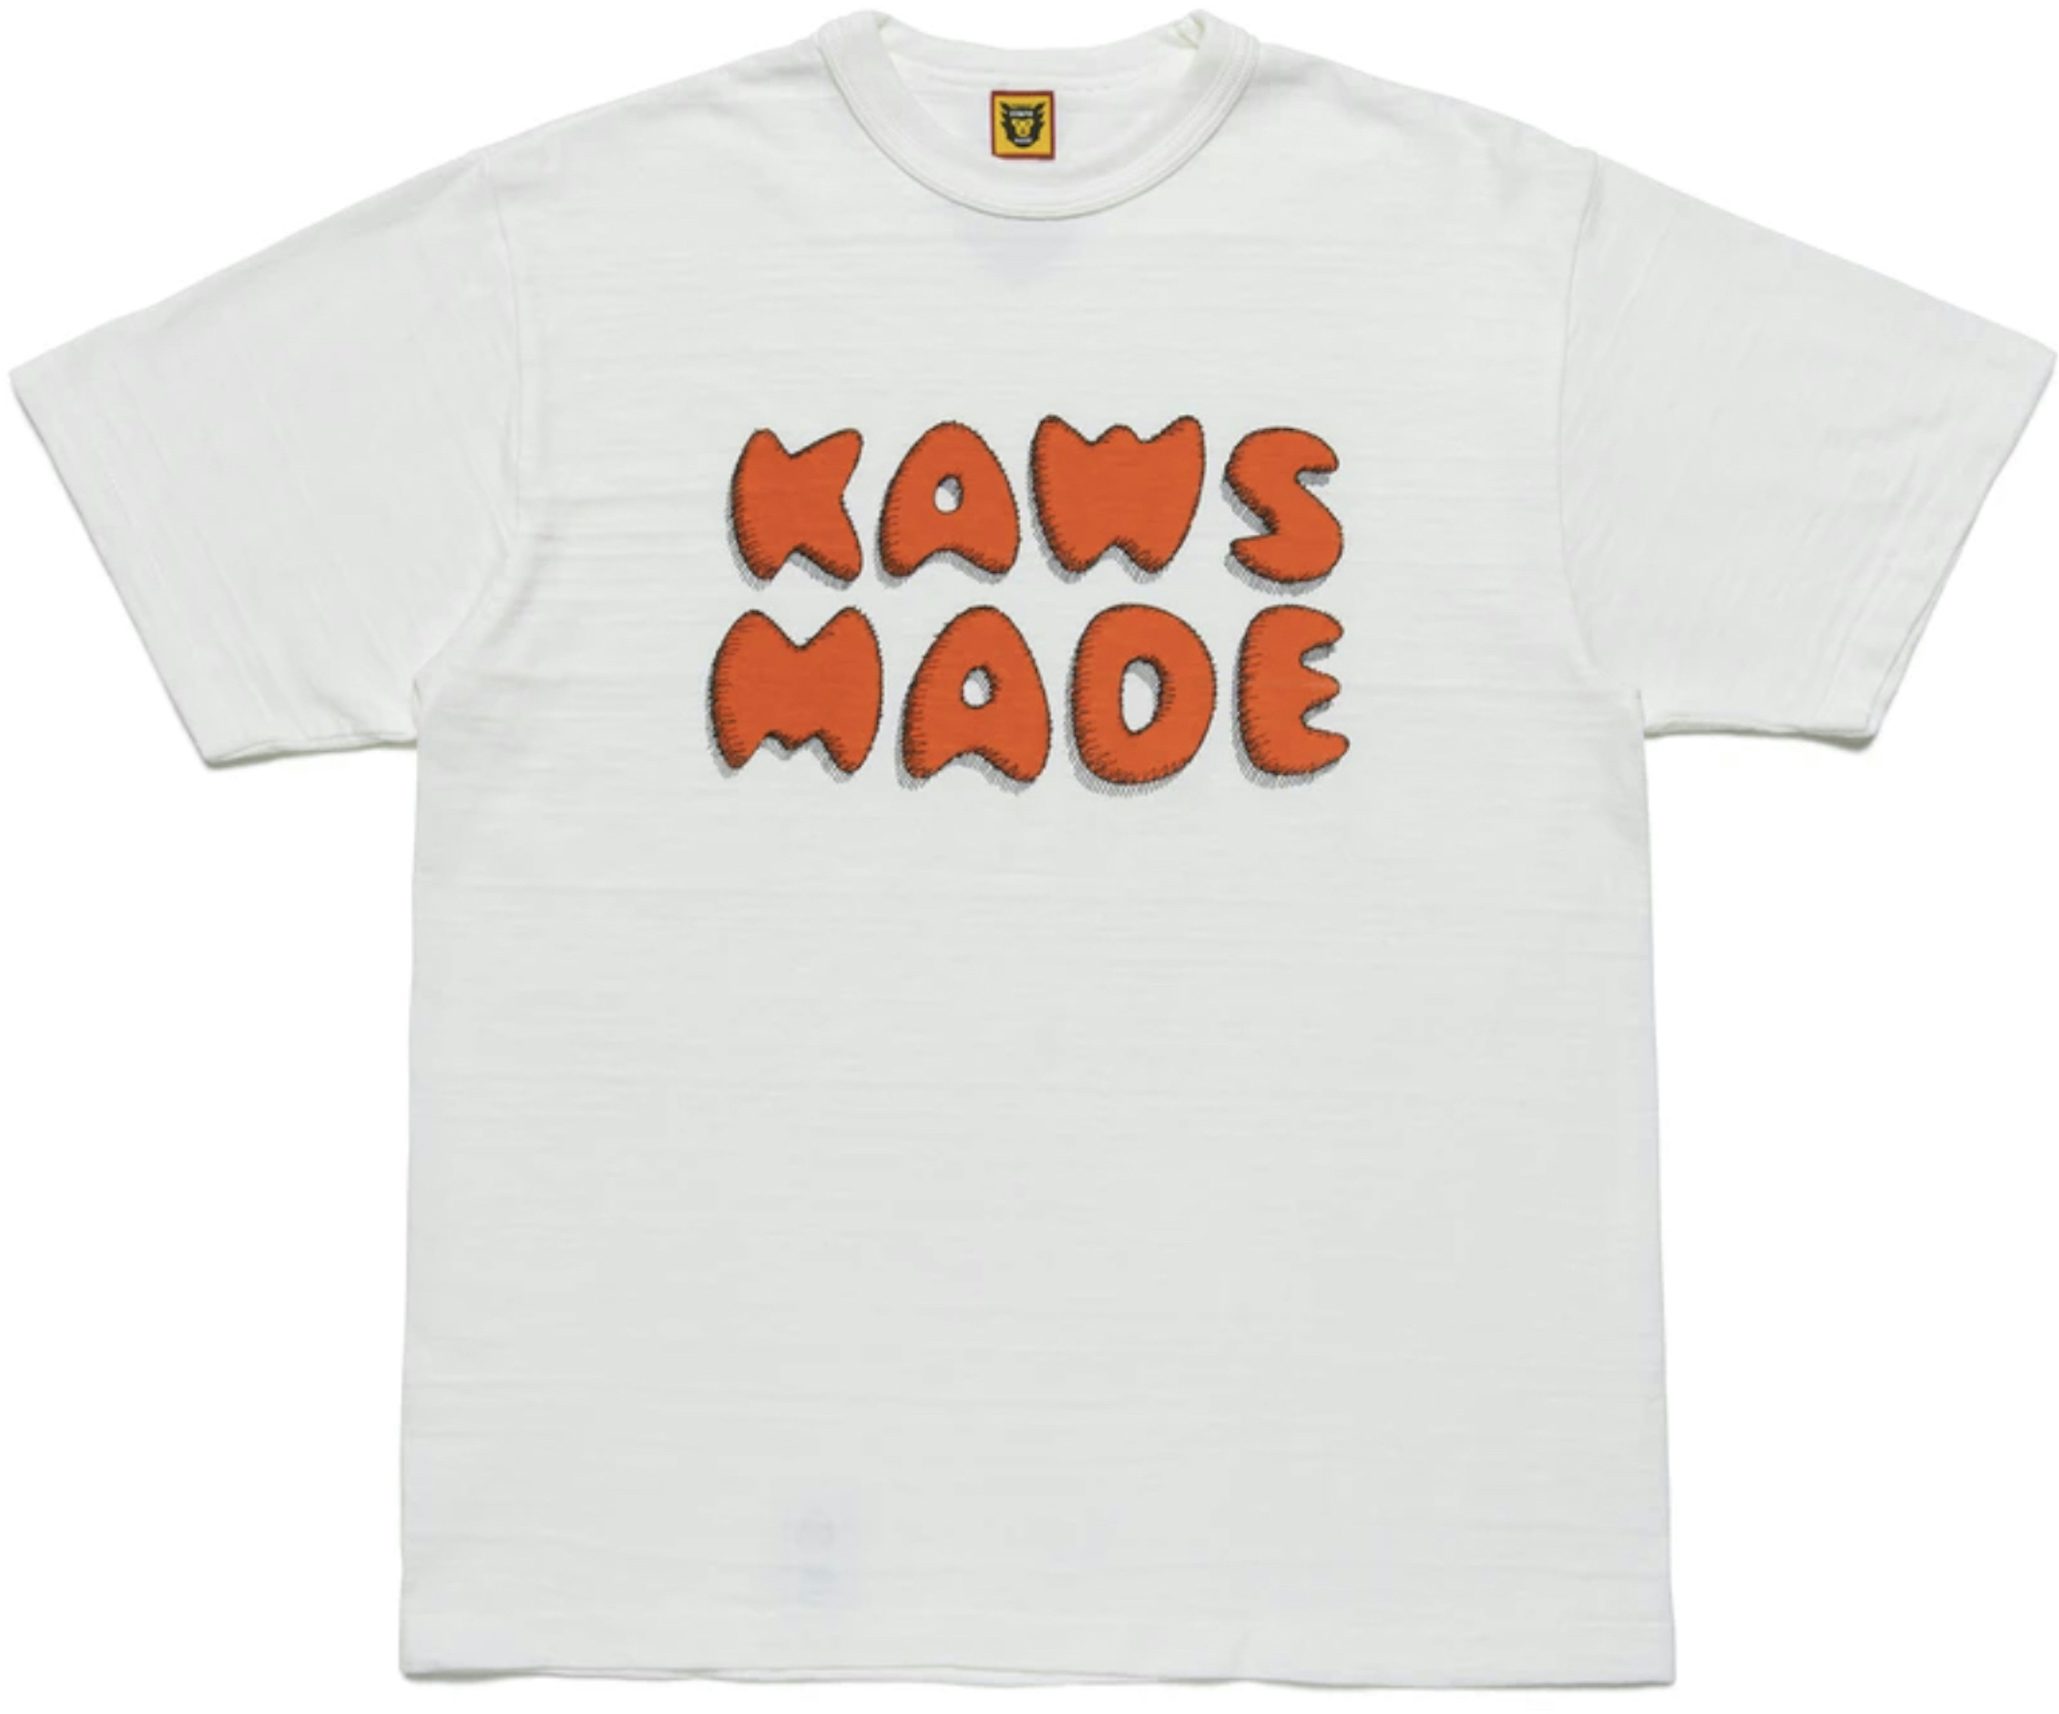 Human Made x KAWS Collaboration Duck BAPE NIGO Sweatshirt Gray Size L